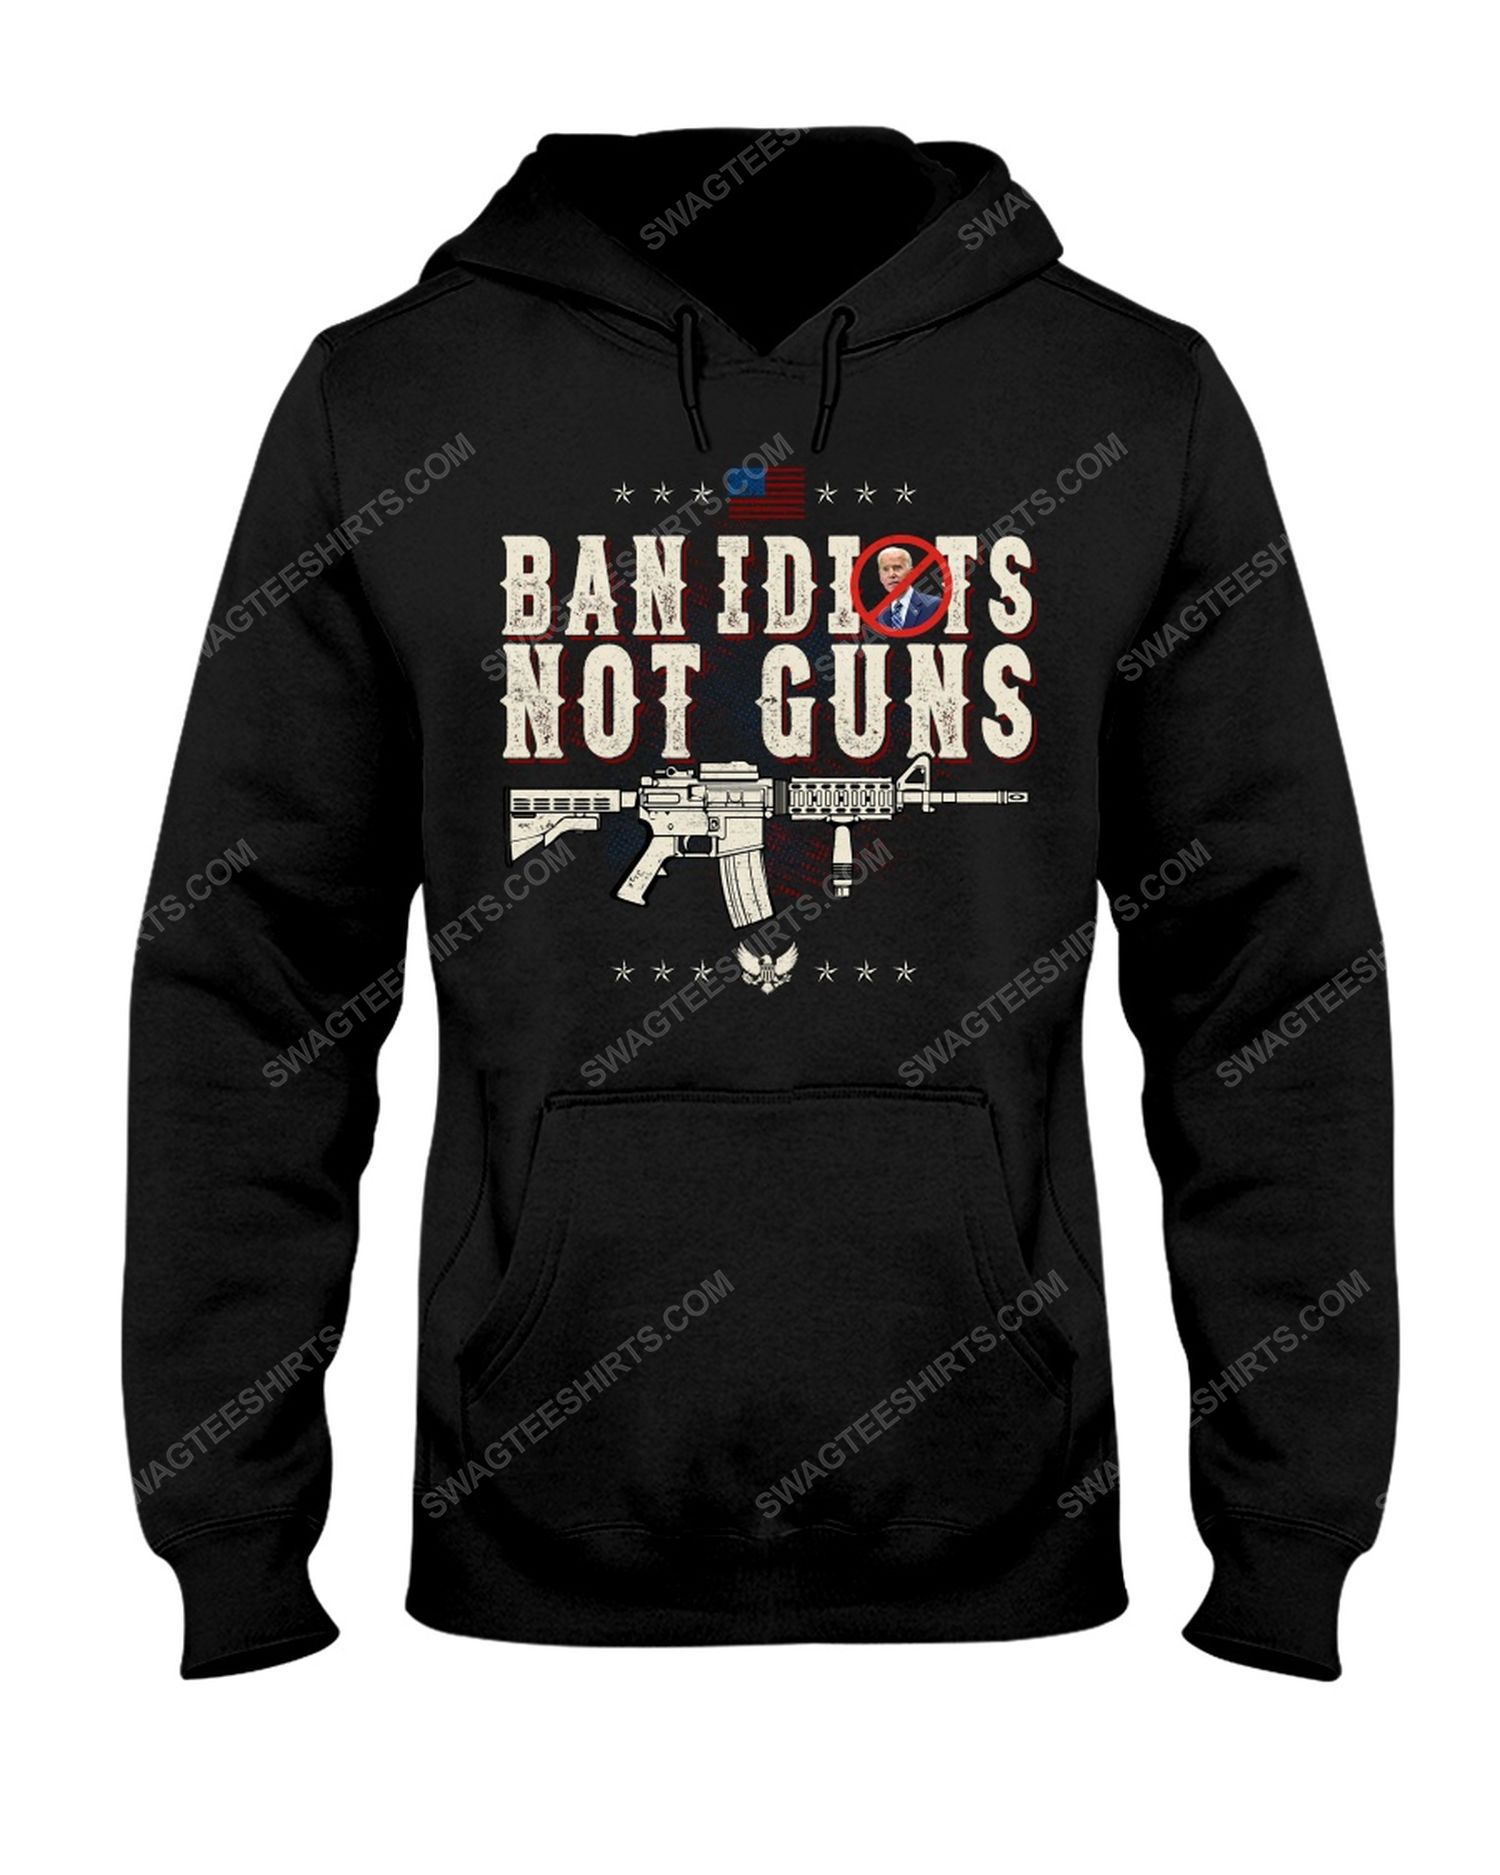 Ban idiots not guns political hoodie